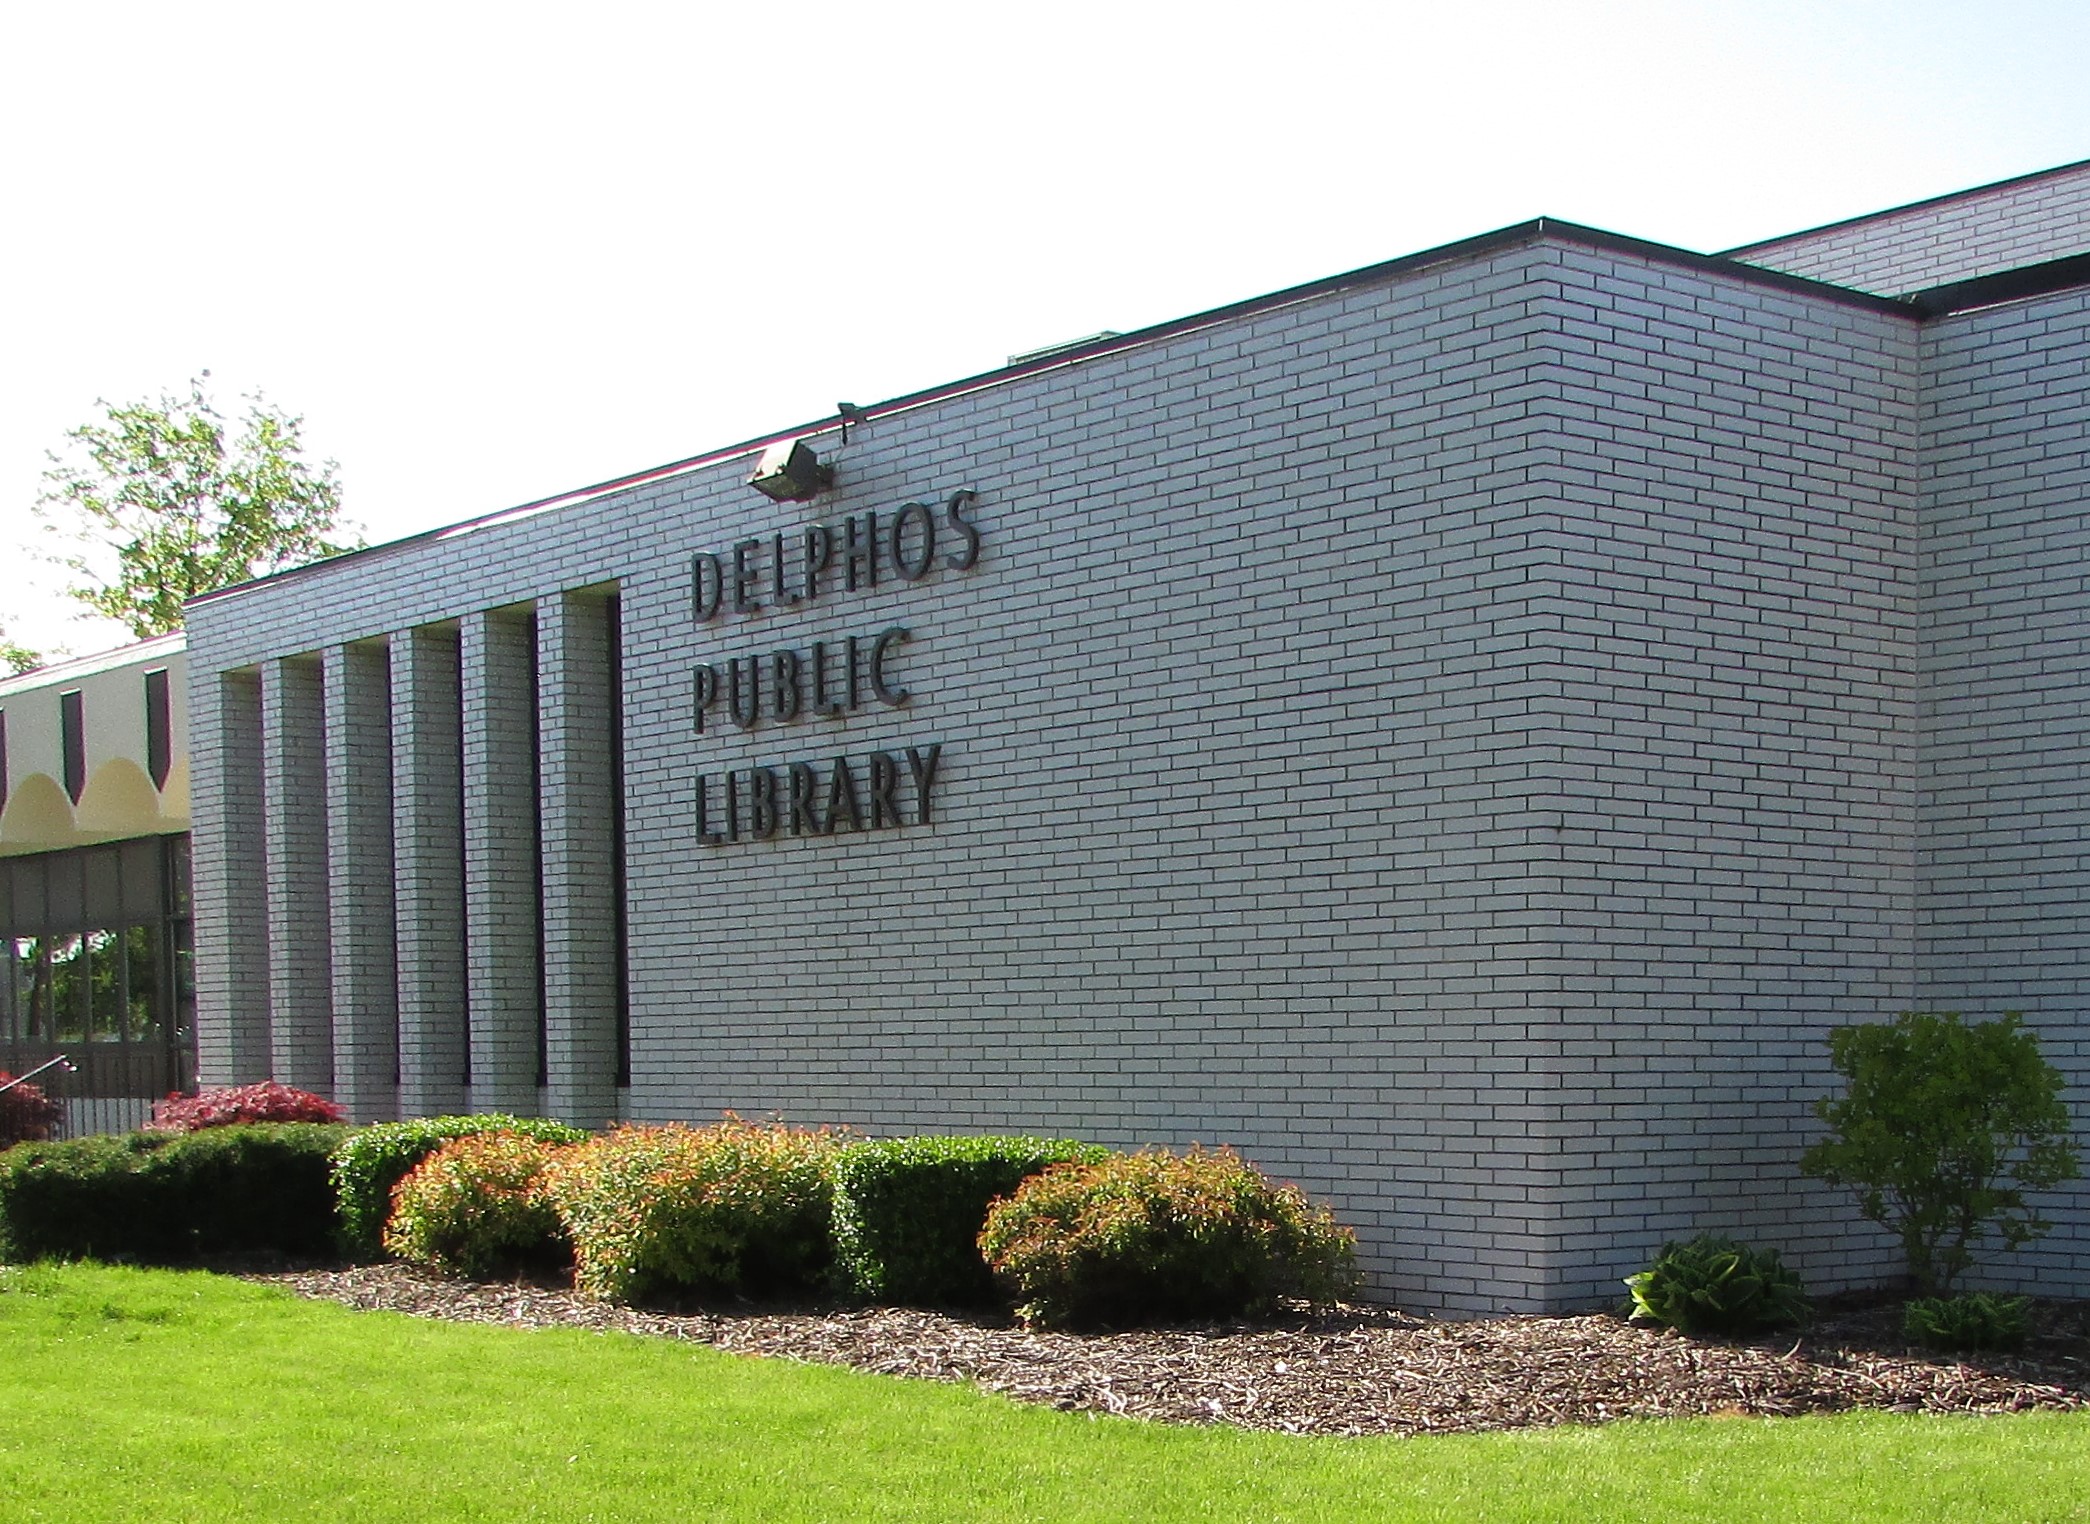 Exterior view of Delphos Public Library building